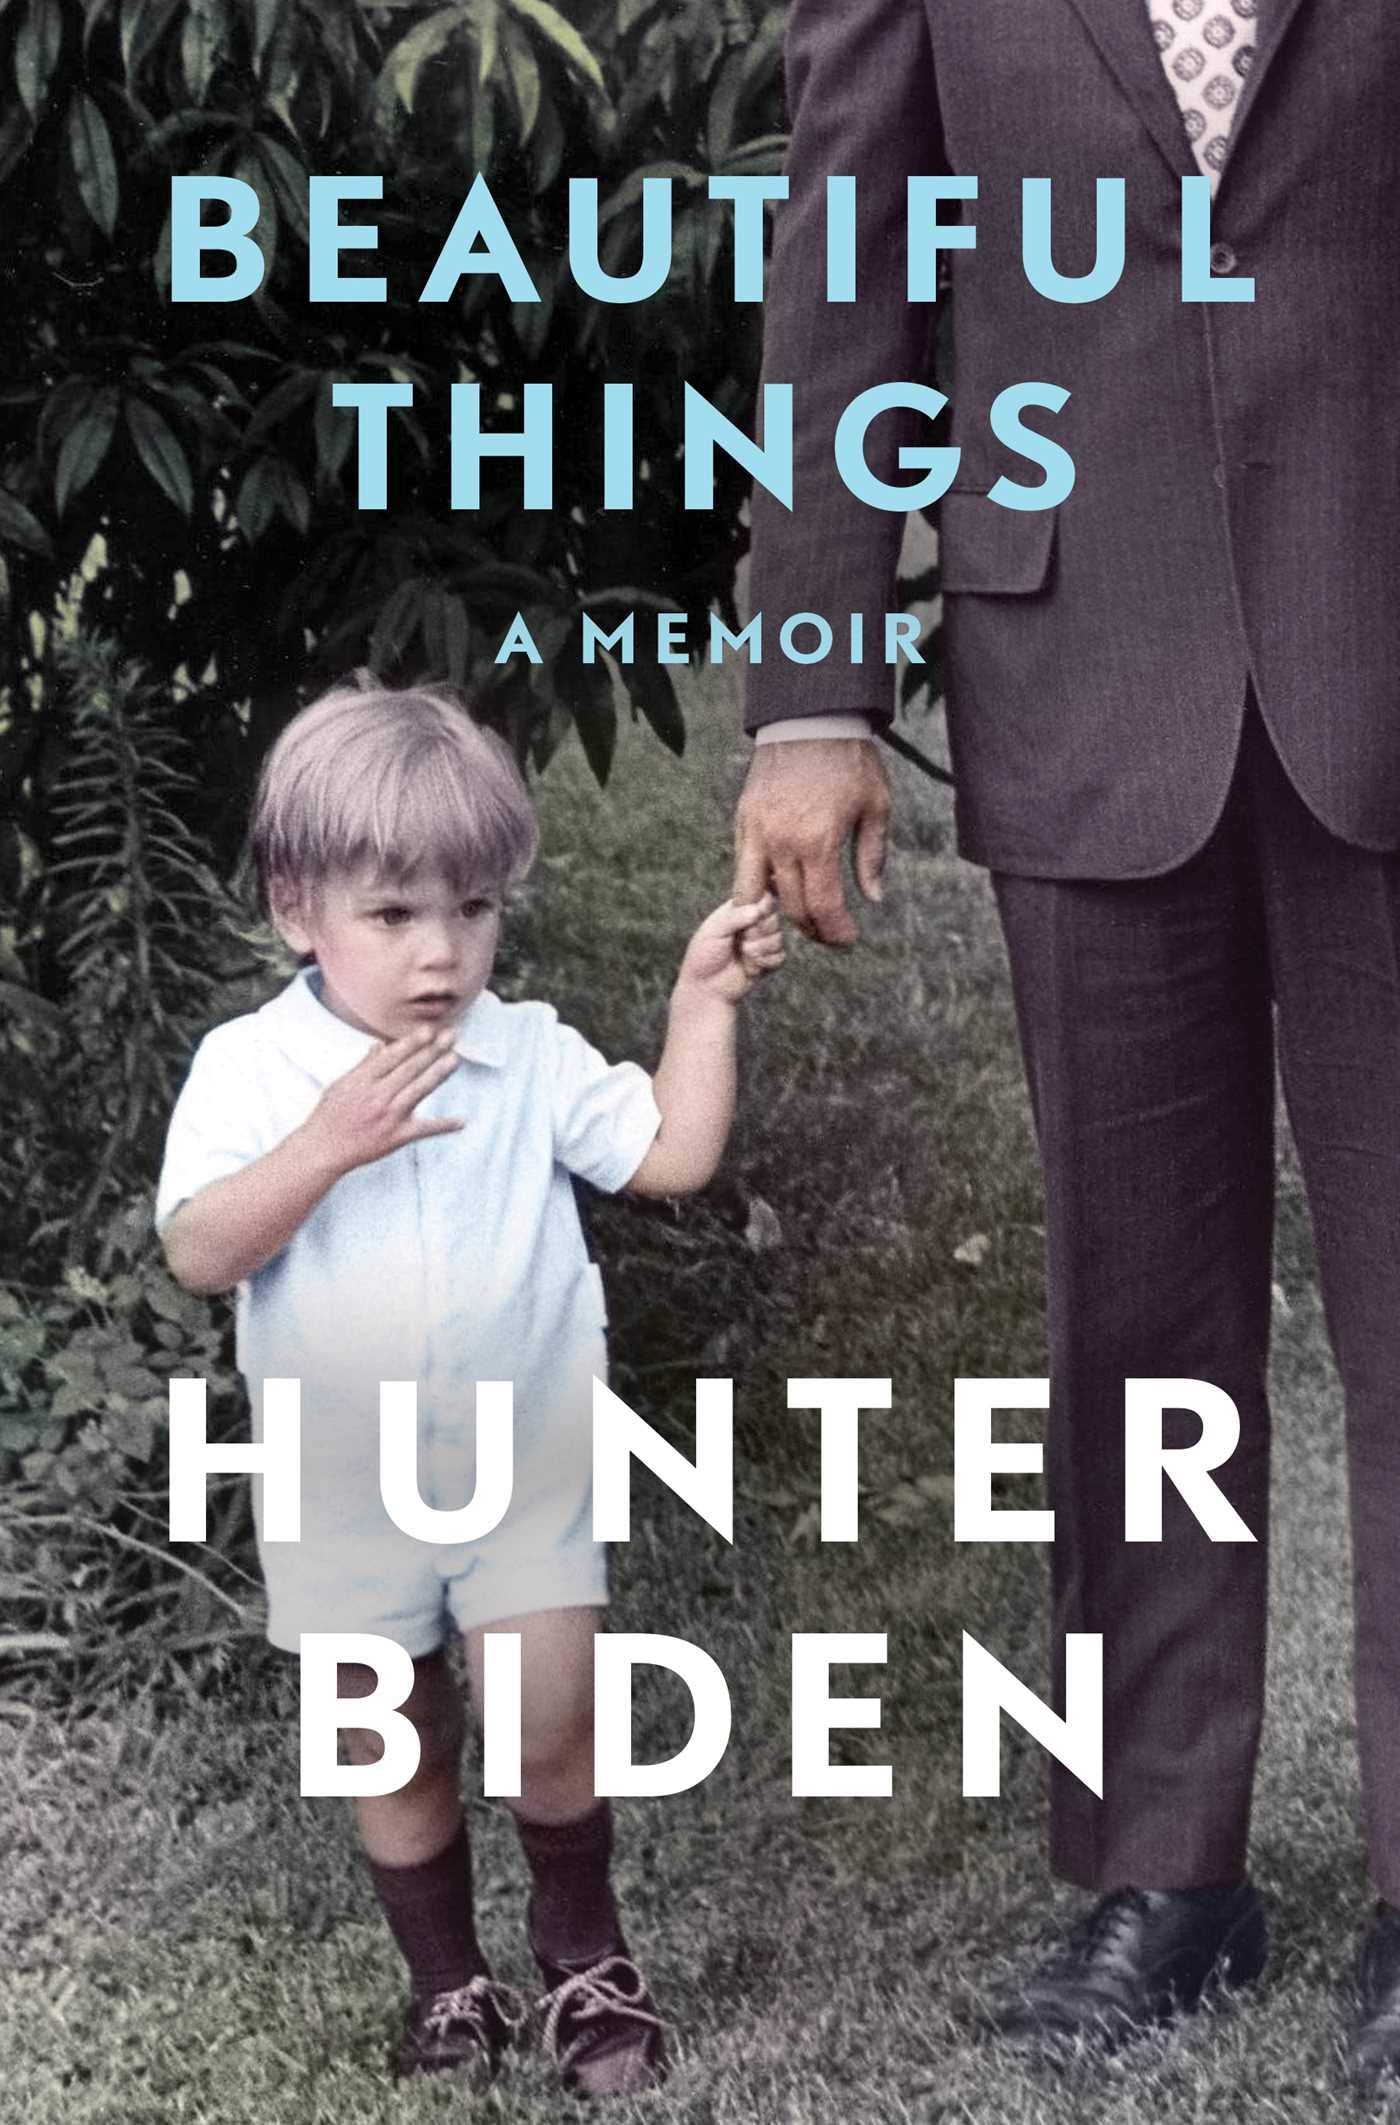 Beautiful Things: A Memoir, by Hunter Biden